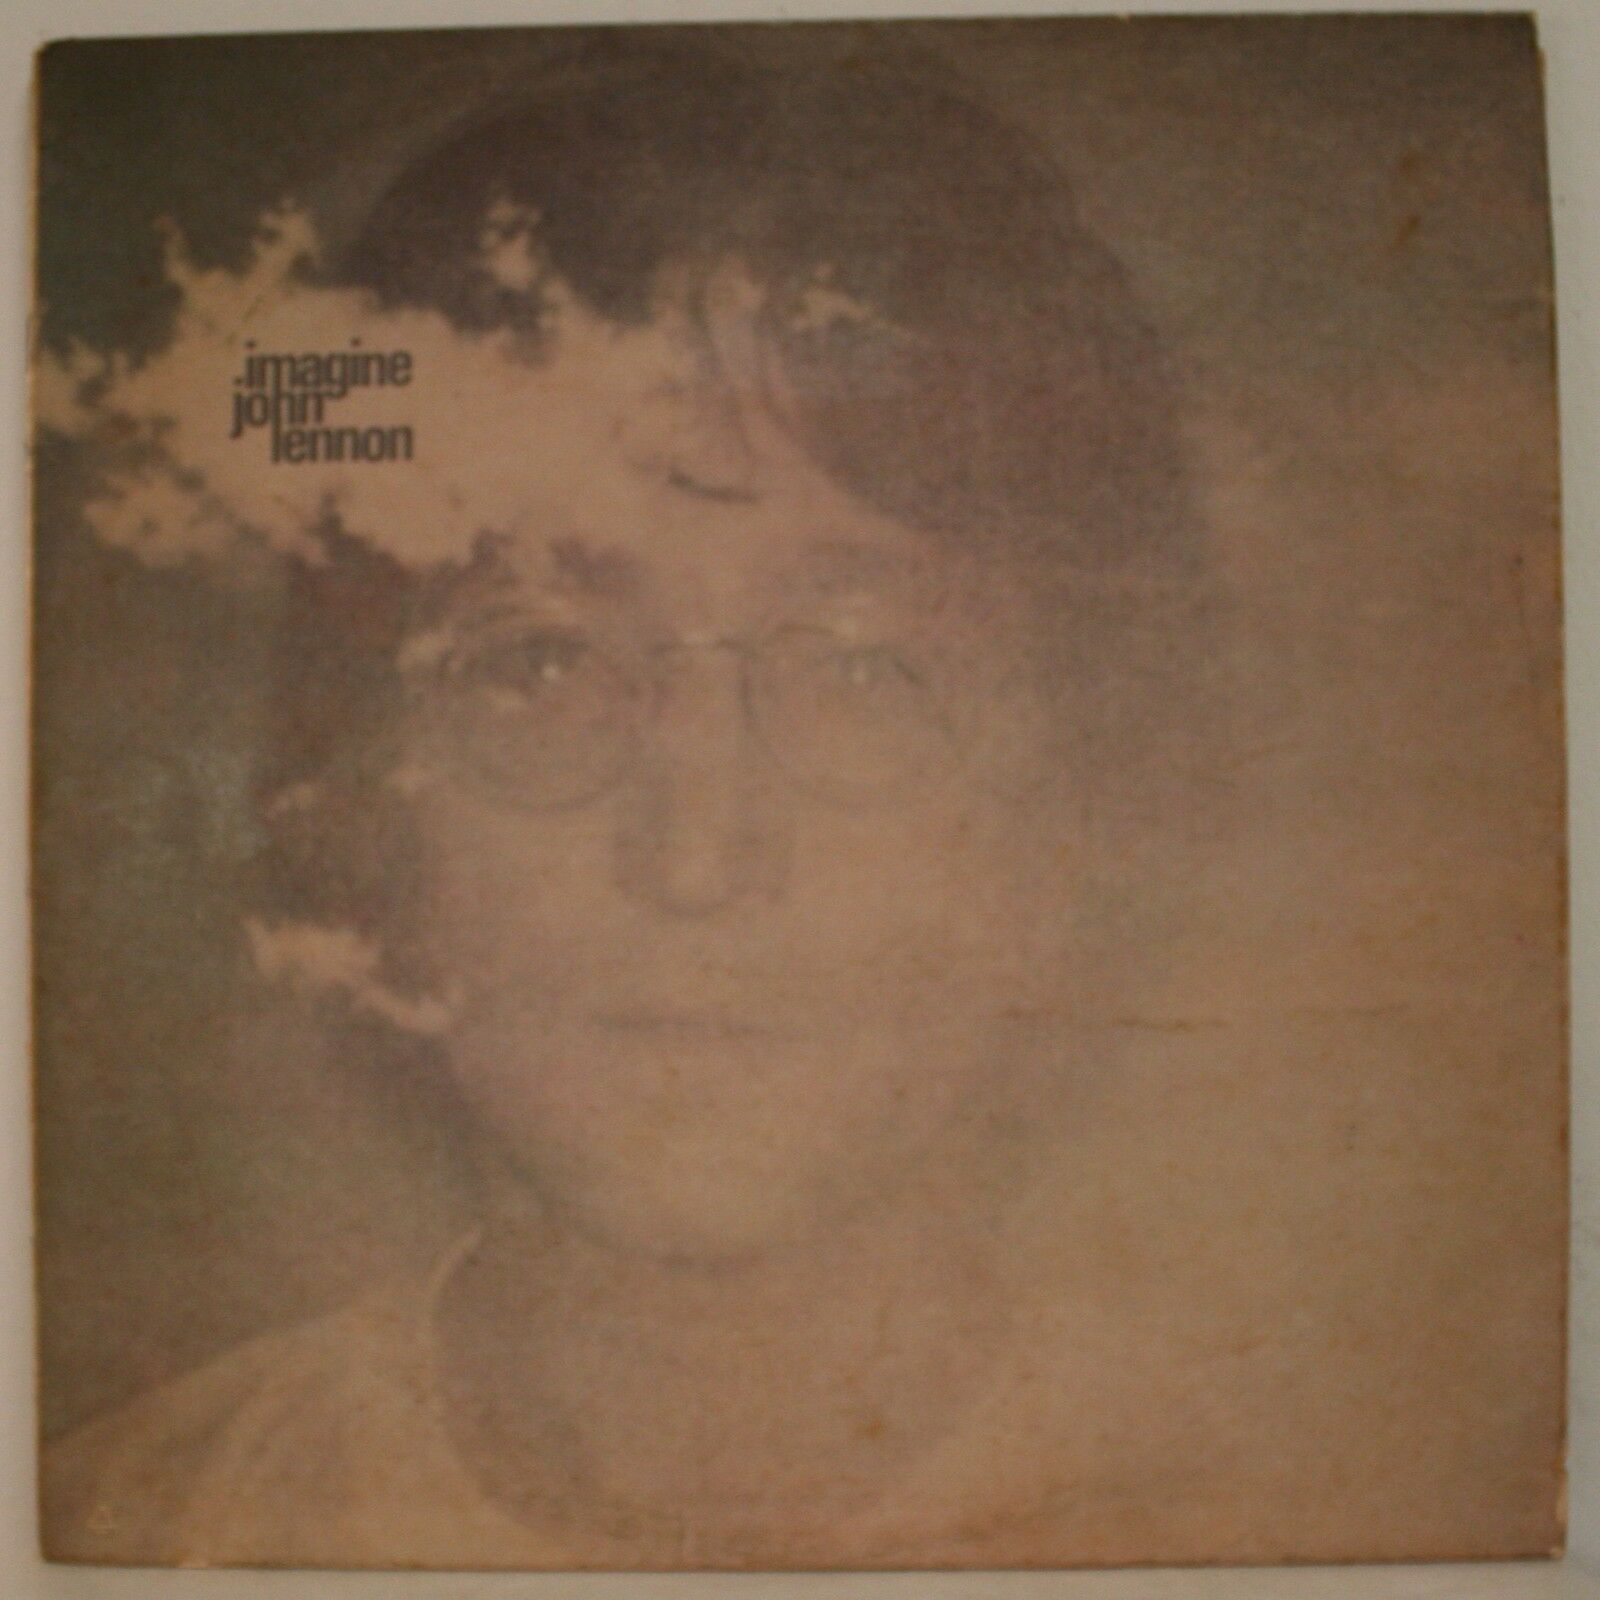 John Lennon – Imagine 12″ LP PARLOPHONE PAS 10004 – Israel Pressing Laminated